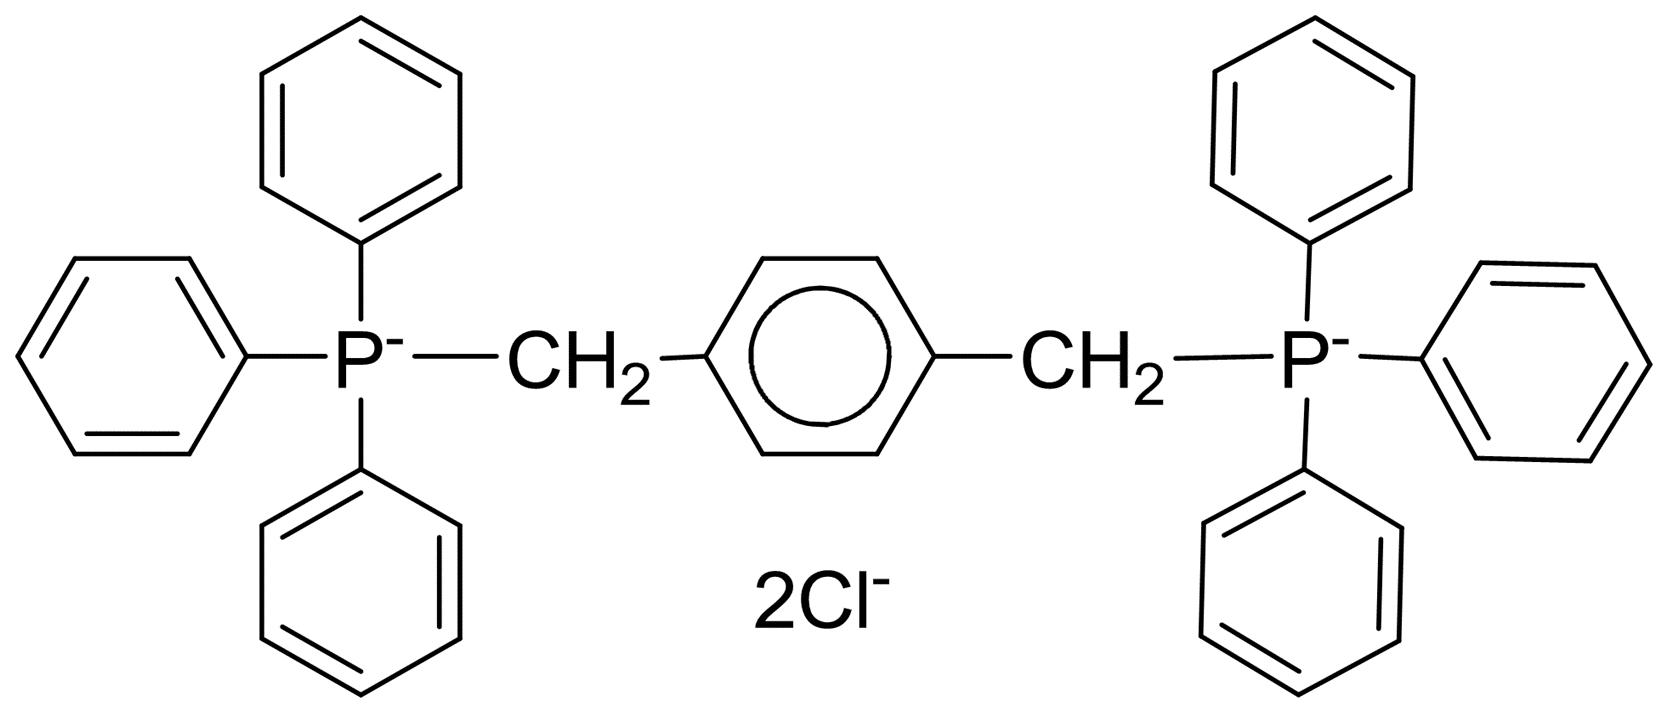 p-xylylenebis(triphenyl-phosphoniudichloride